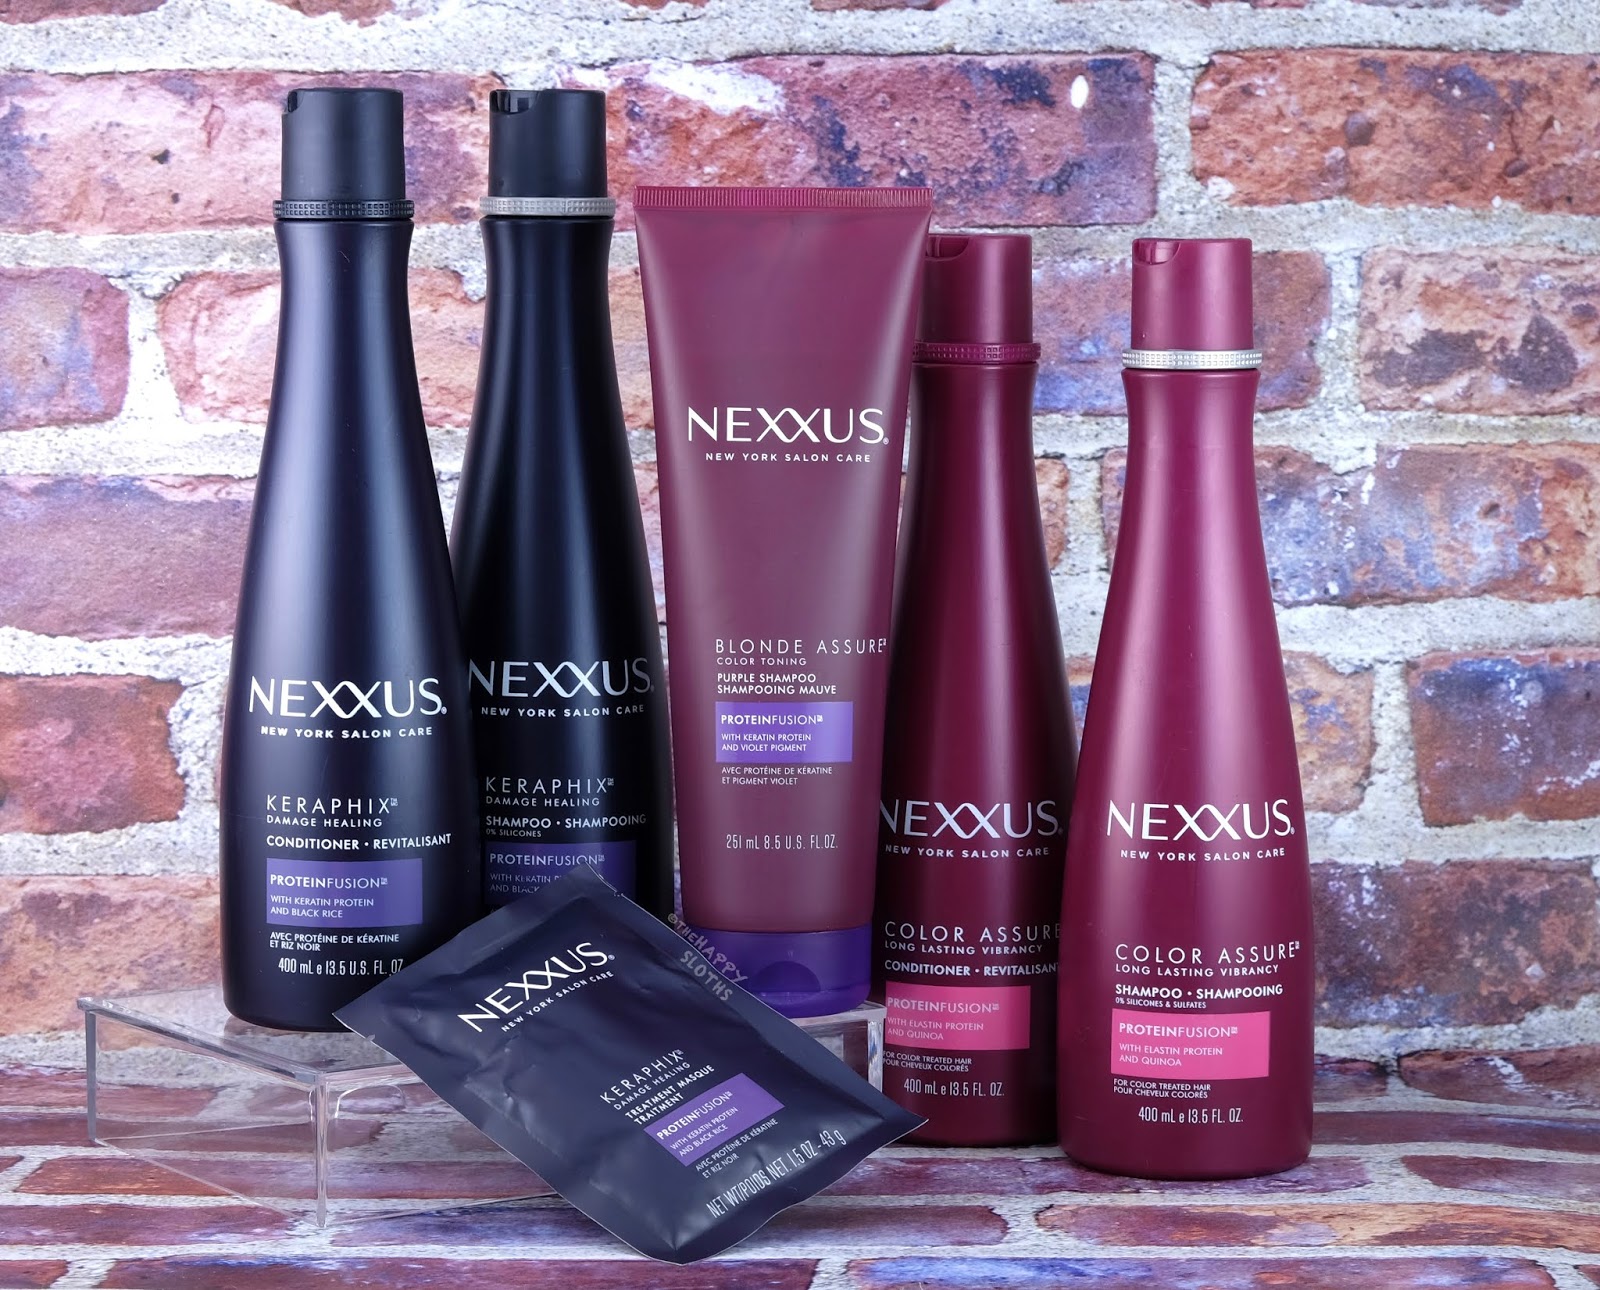 Nexxus | Keraphix Damage Healing and Color Assure Collection